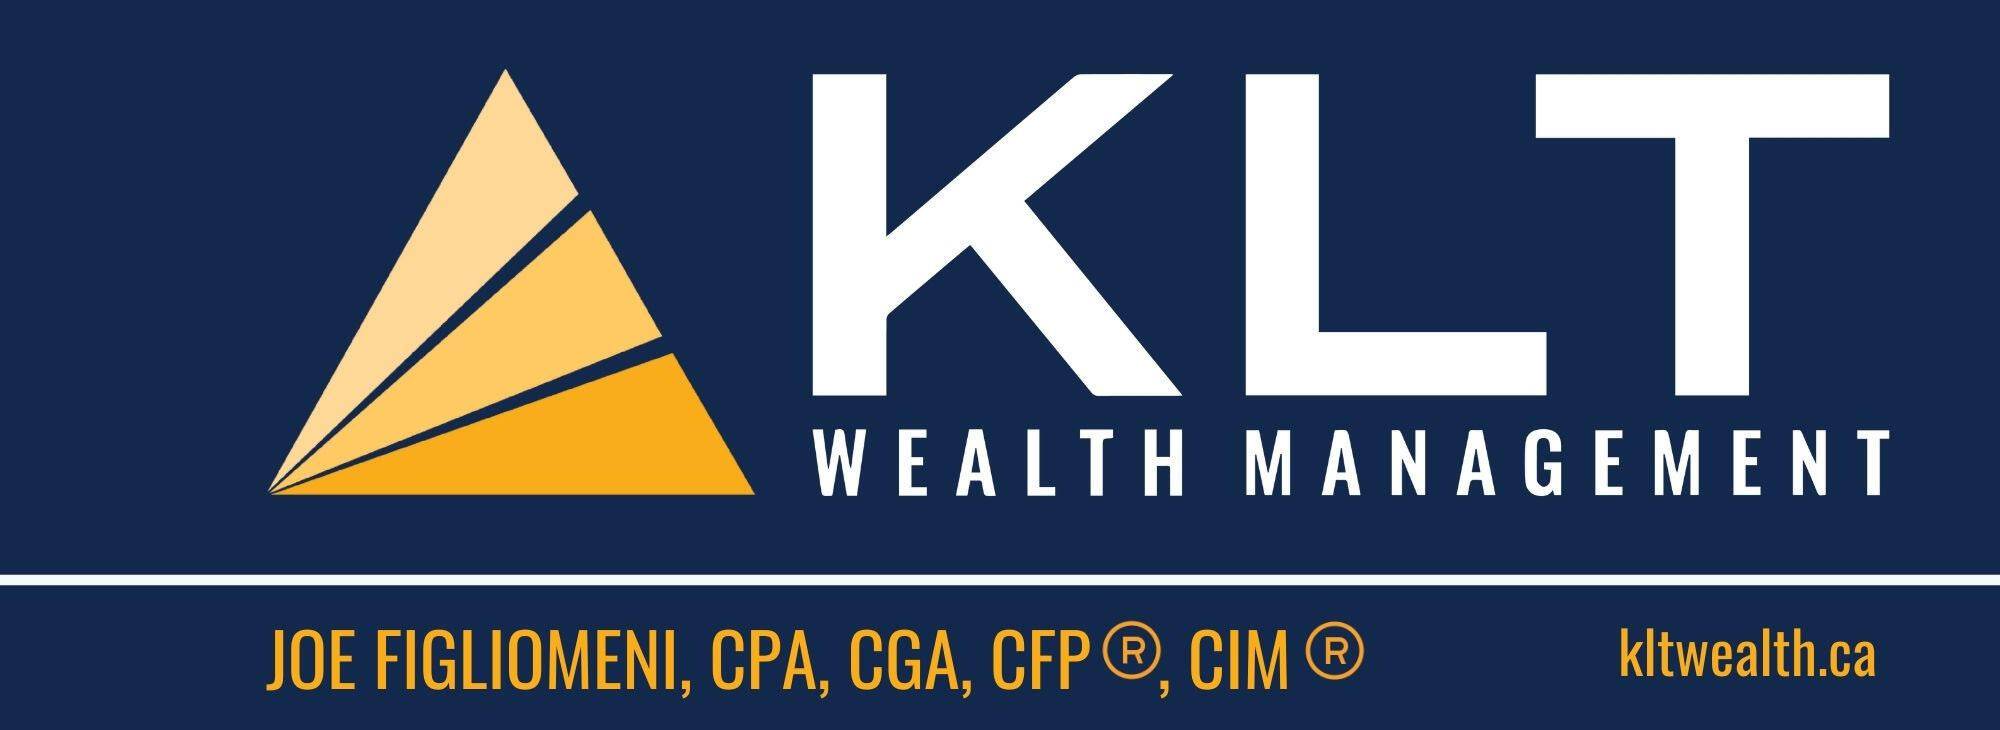 KLT Wealth Management